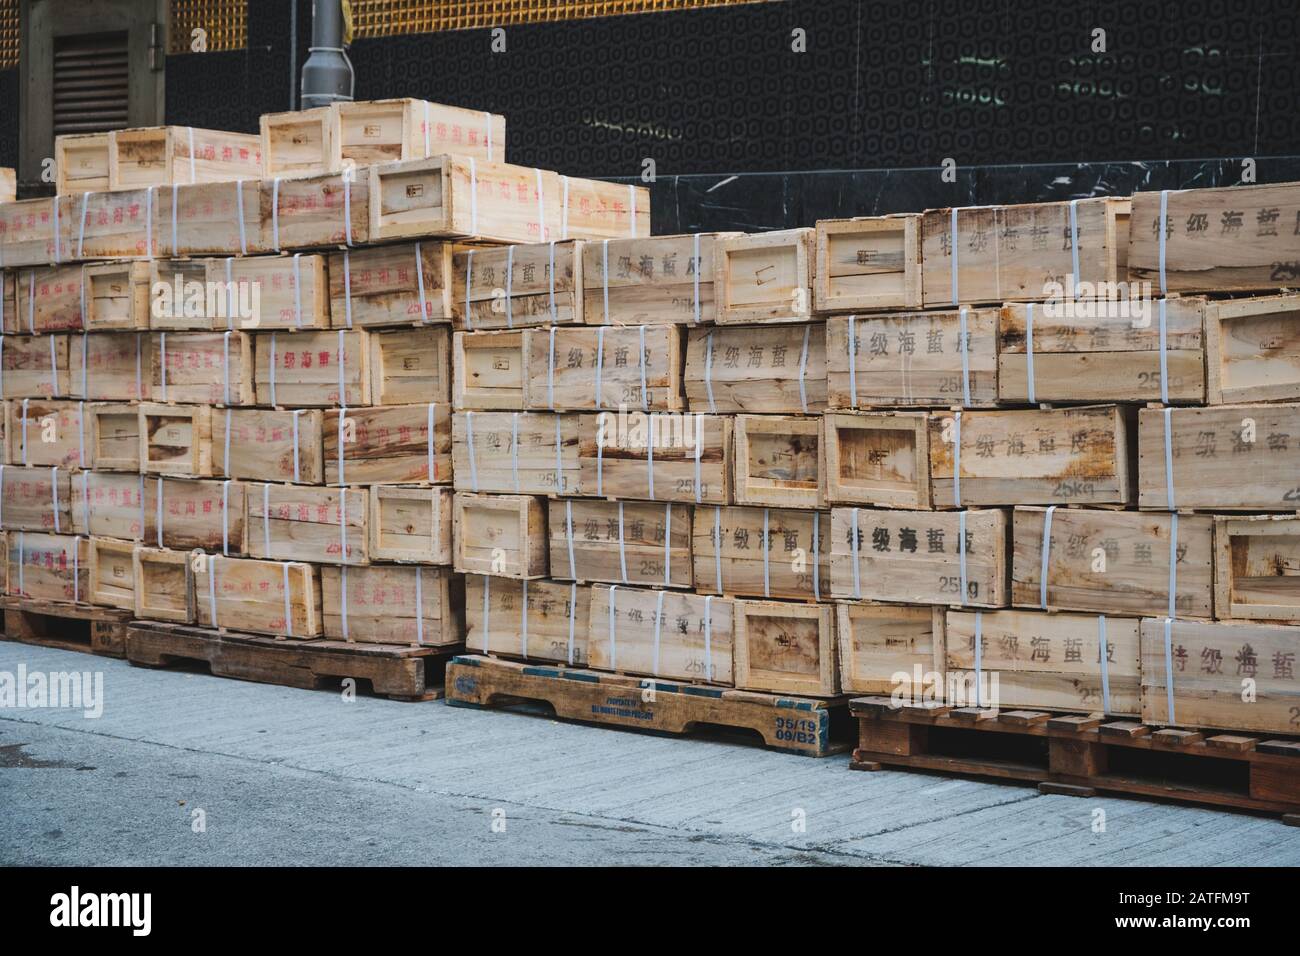 Hongkong - November 2019: Chinesischer Import, Exportware in Holzkisten auf Paletten gestapelt Stockfoto